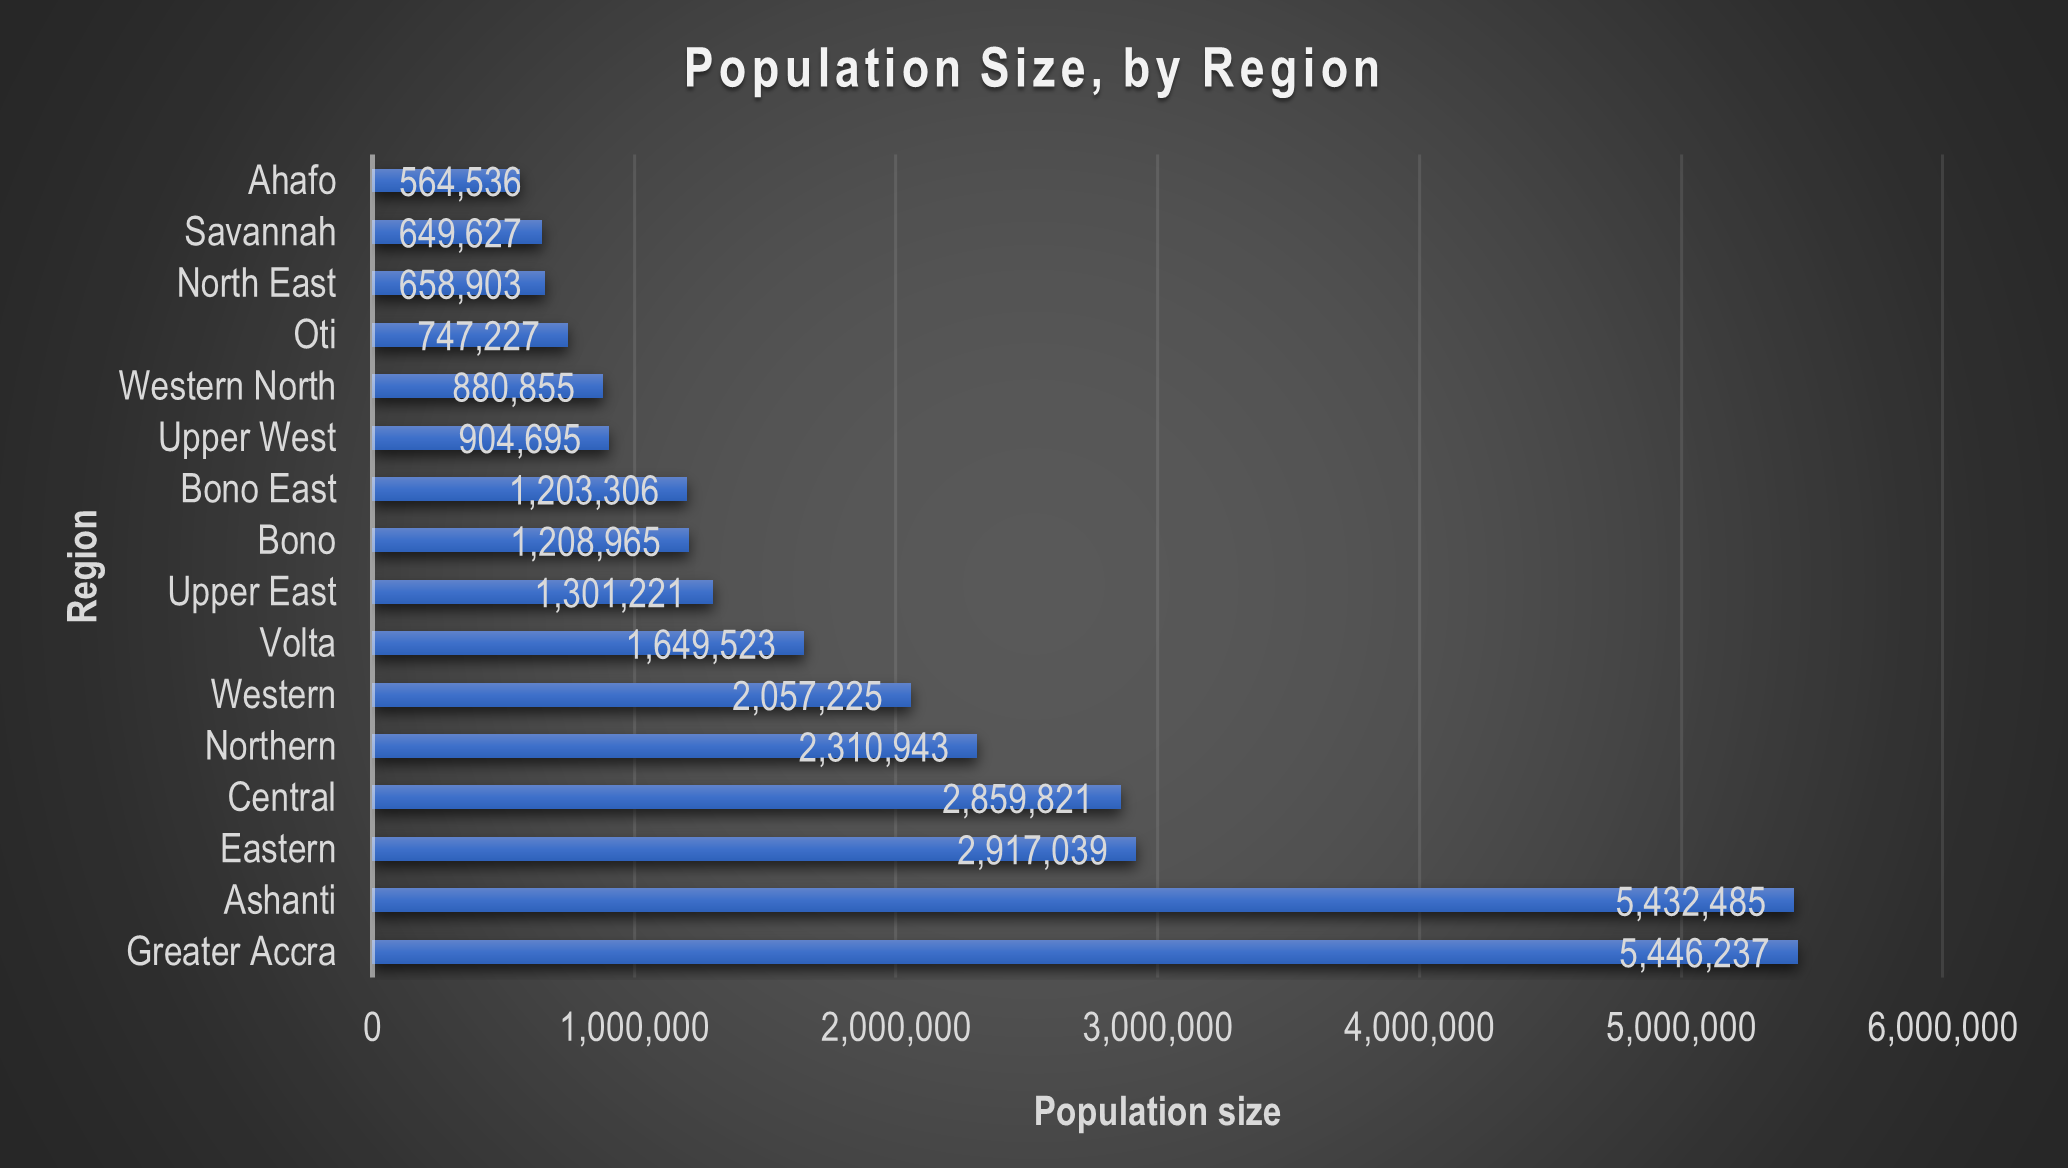 Population size by region